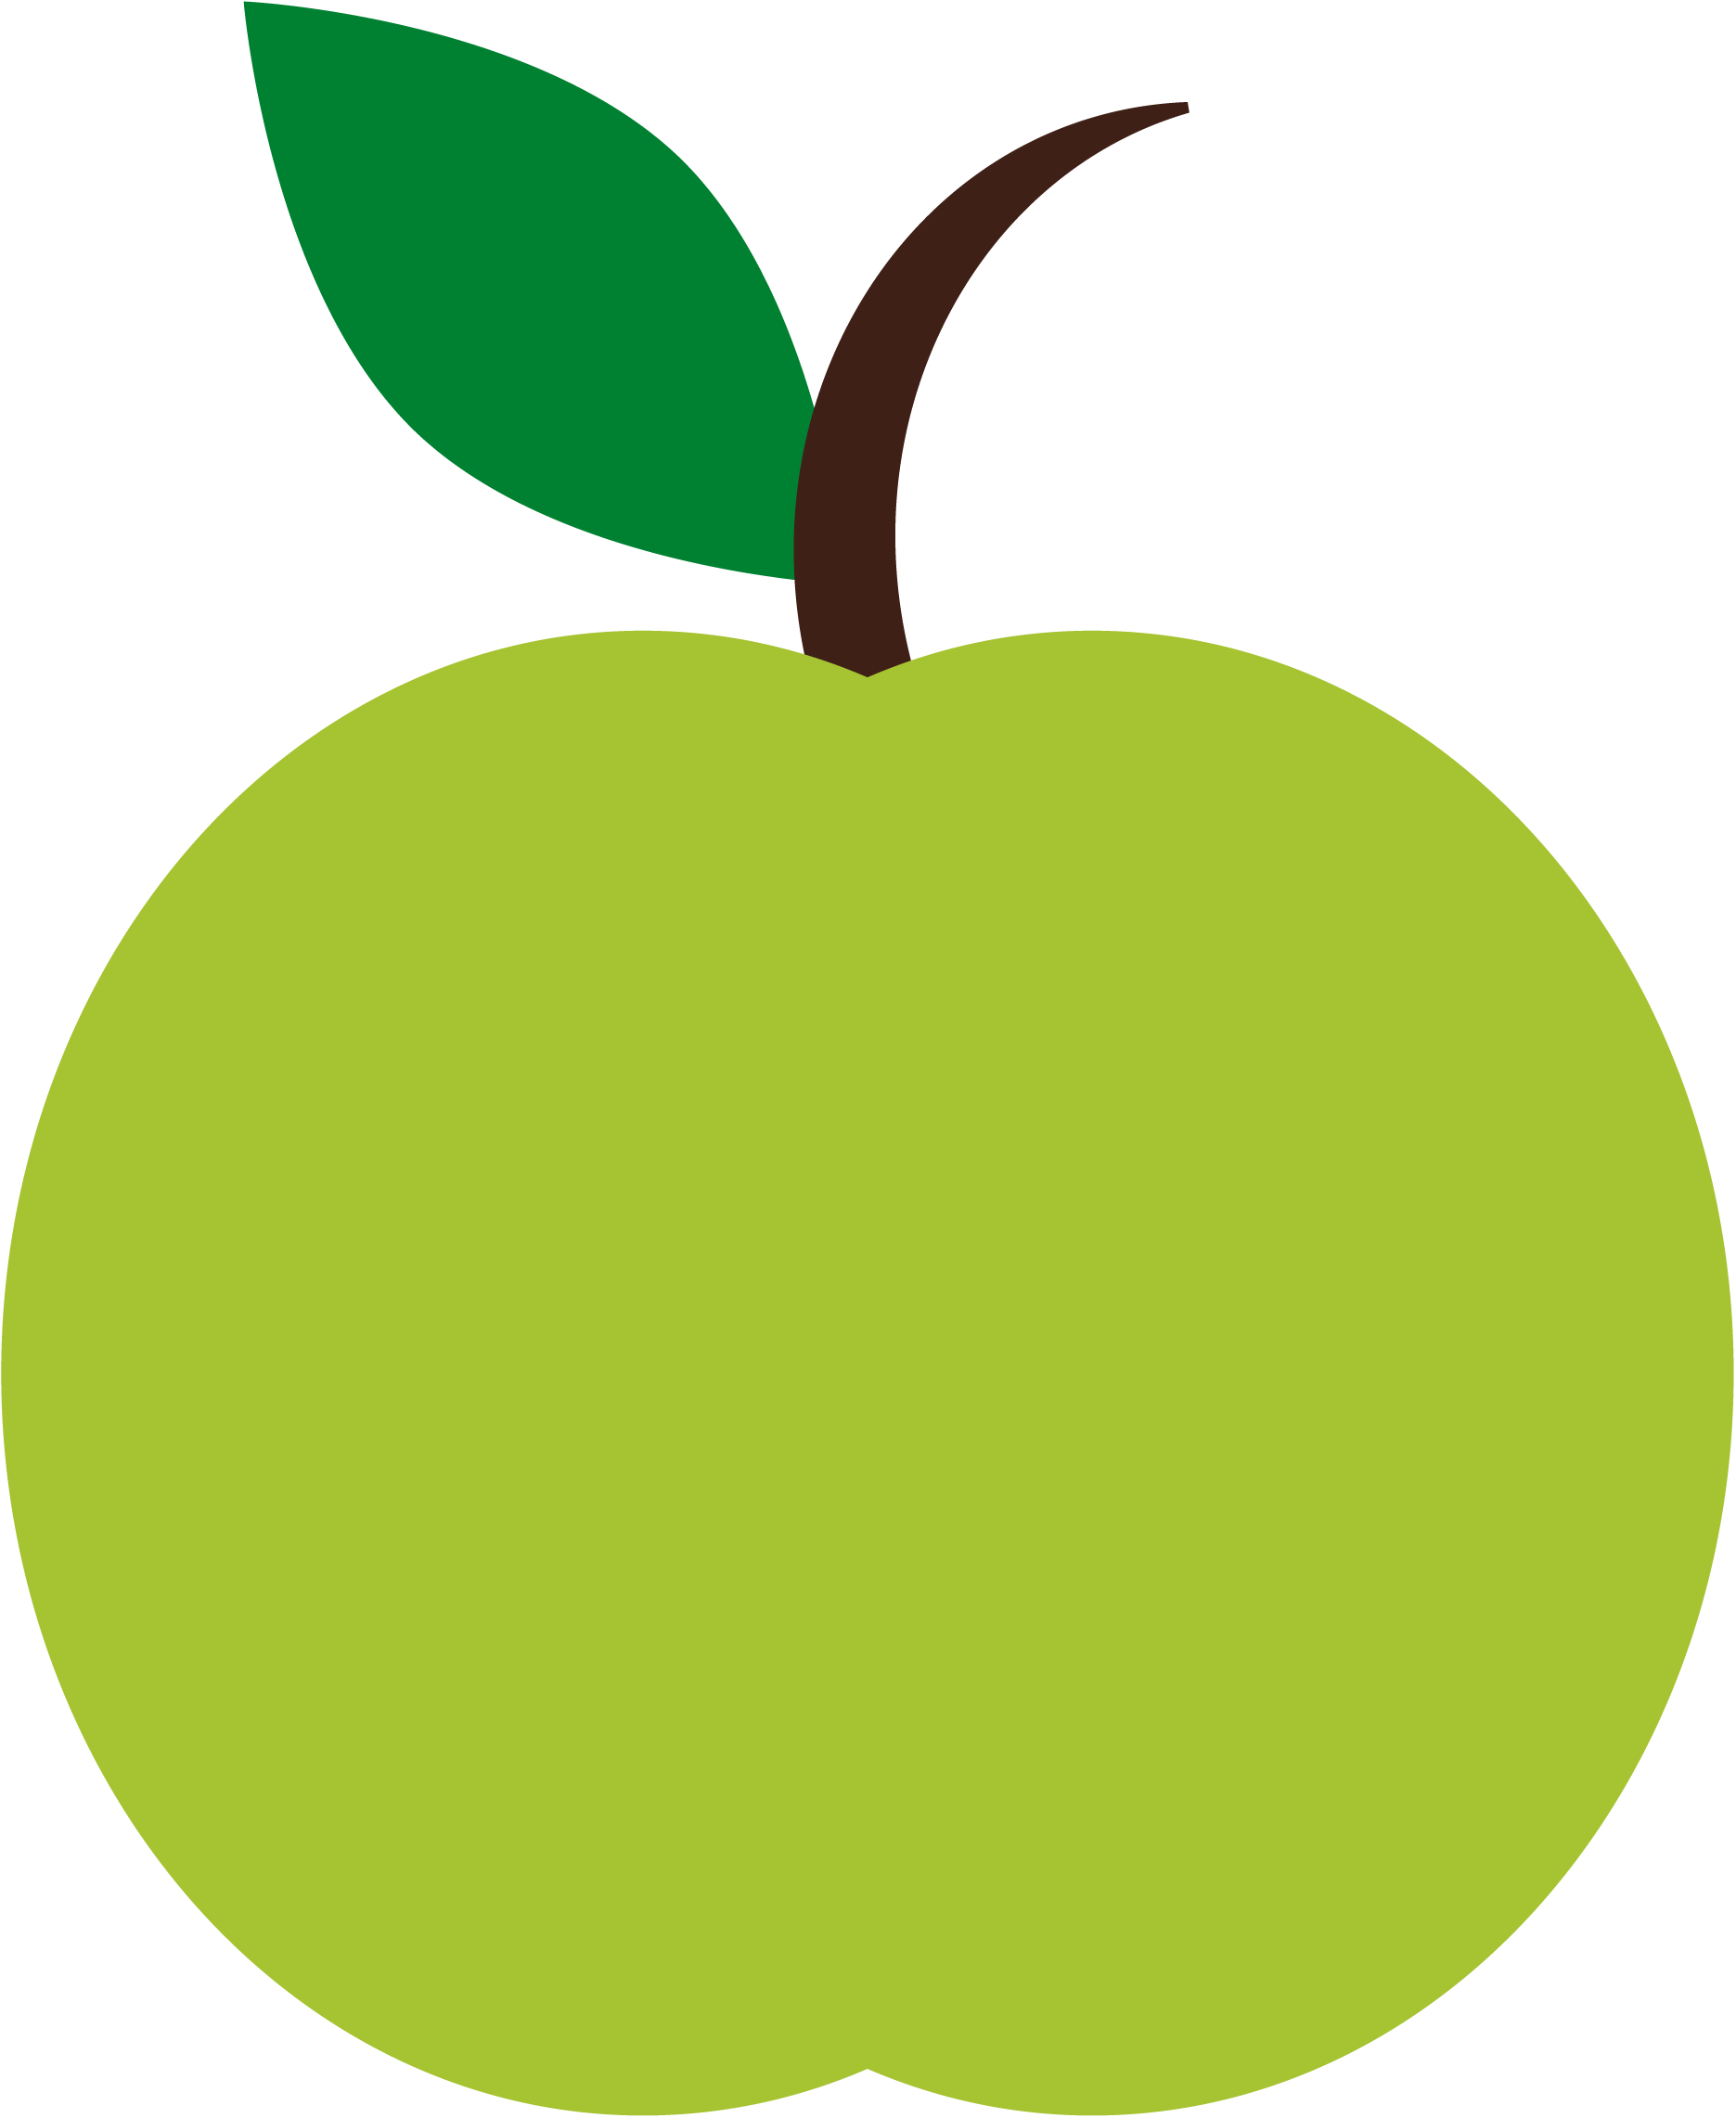 Apples, Fruit, Apple - Bowl Of Soup (1871x2283)